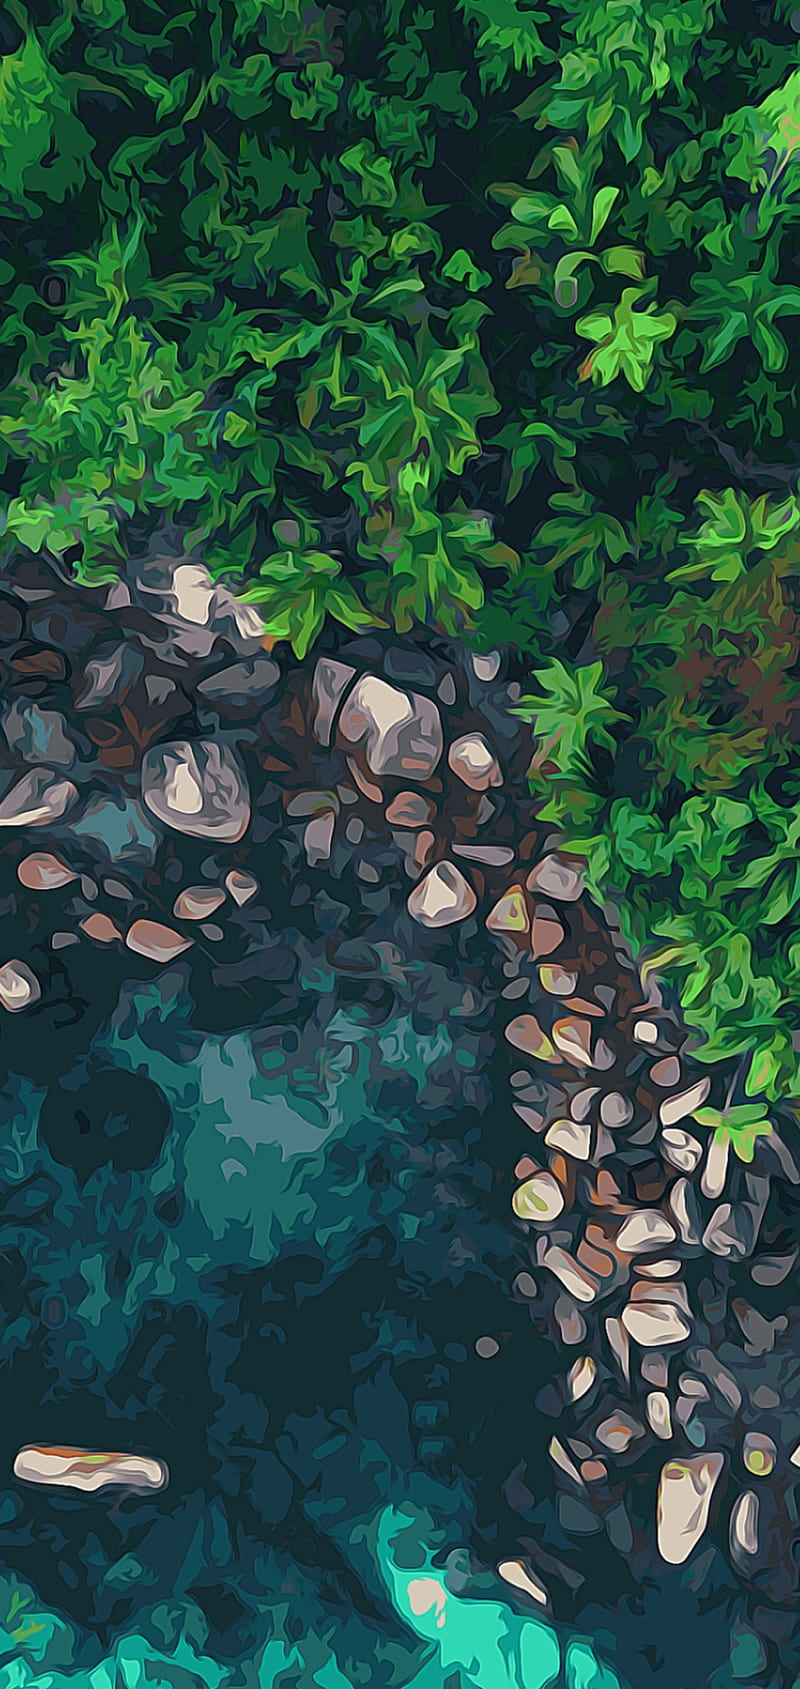 ArtStation - Minimalist Wallpaper 4K - Blue Nature Night Landscape  (multi-device)